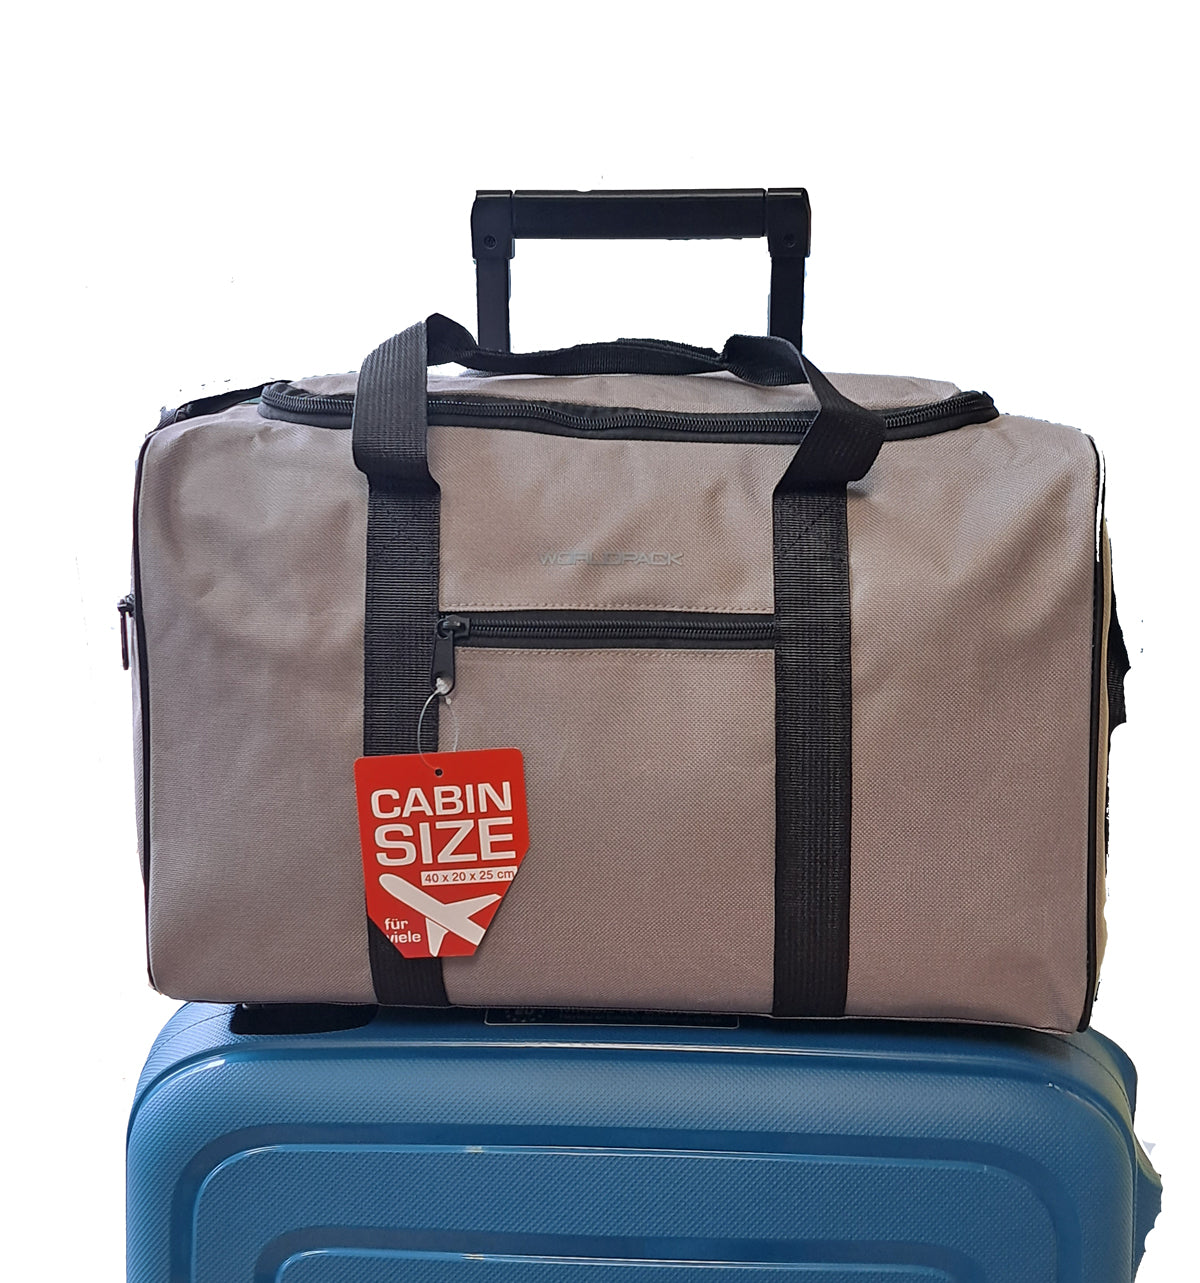 retort hoe Haast je Handbagage ryanair 40x20x25 maximum size | Kofferkopen.nl